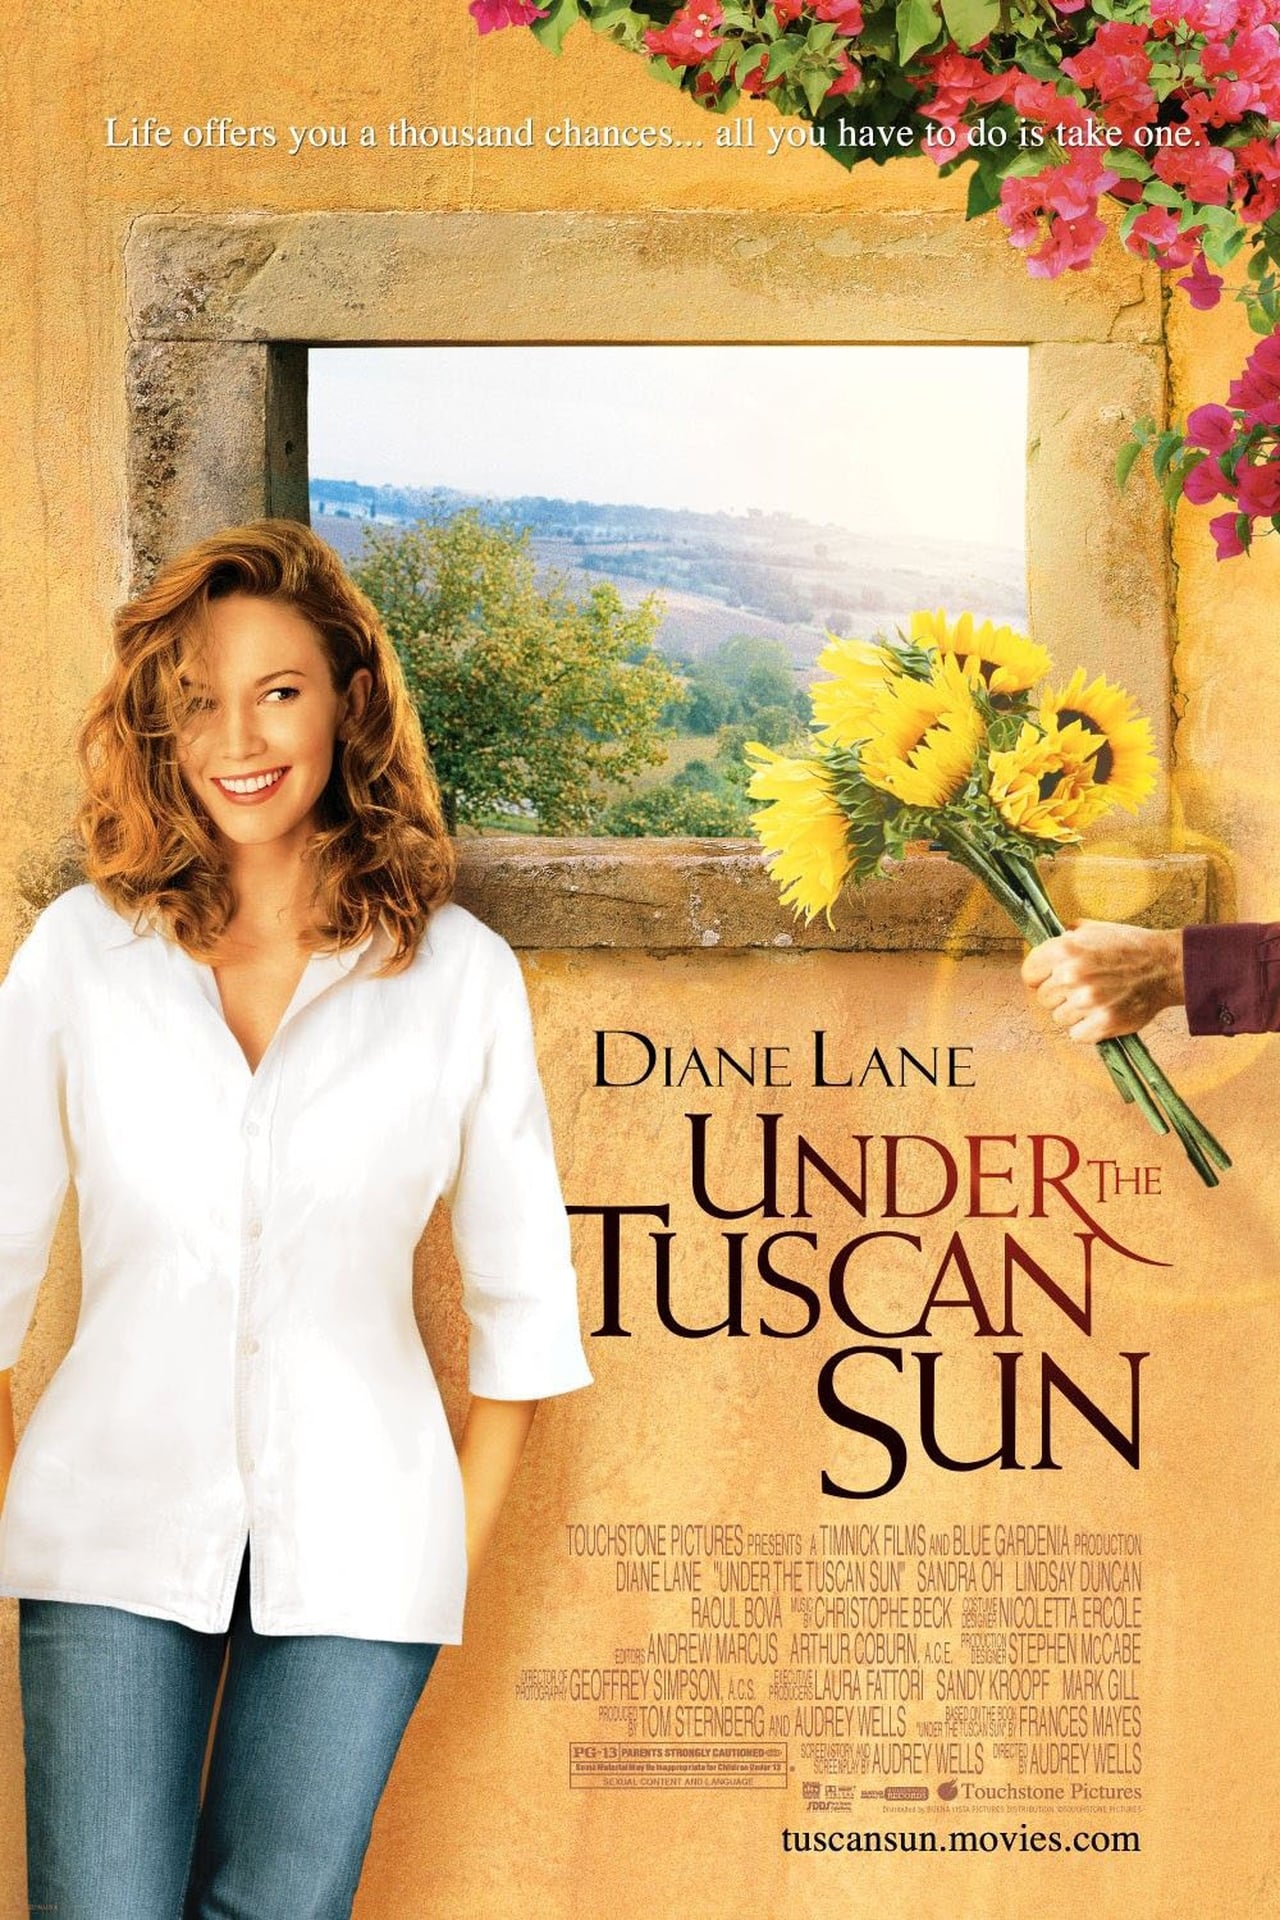 under the tuscan sun book